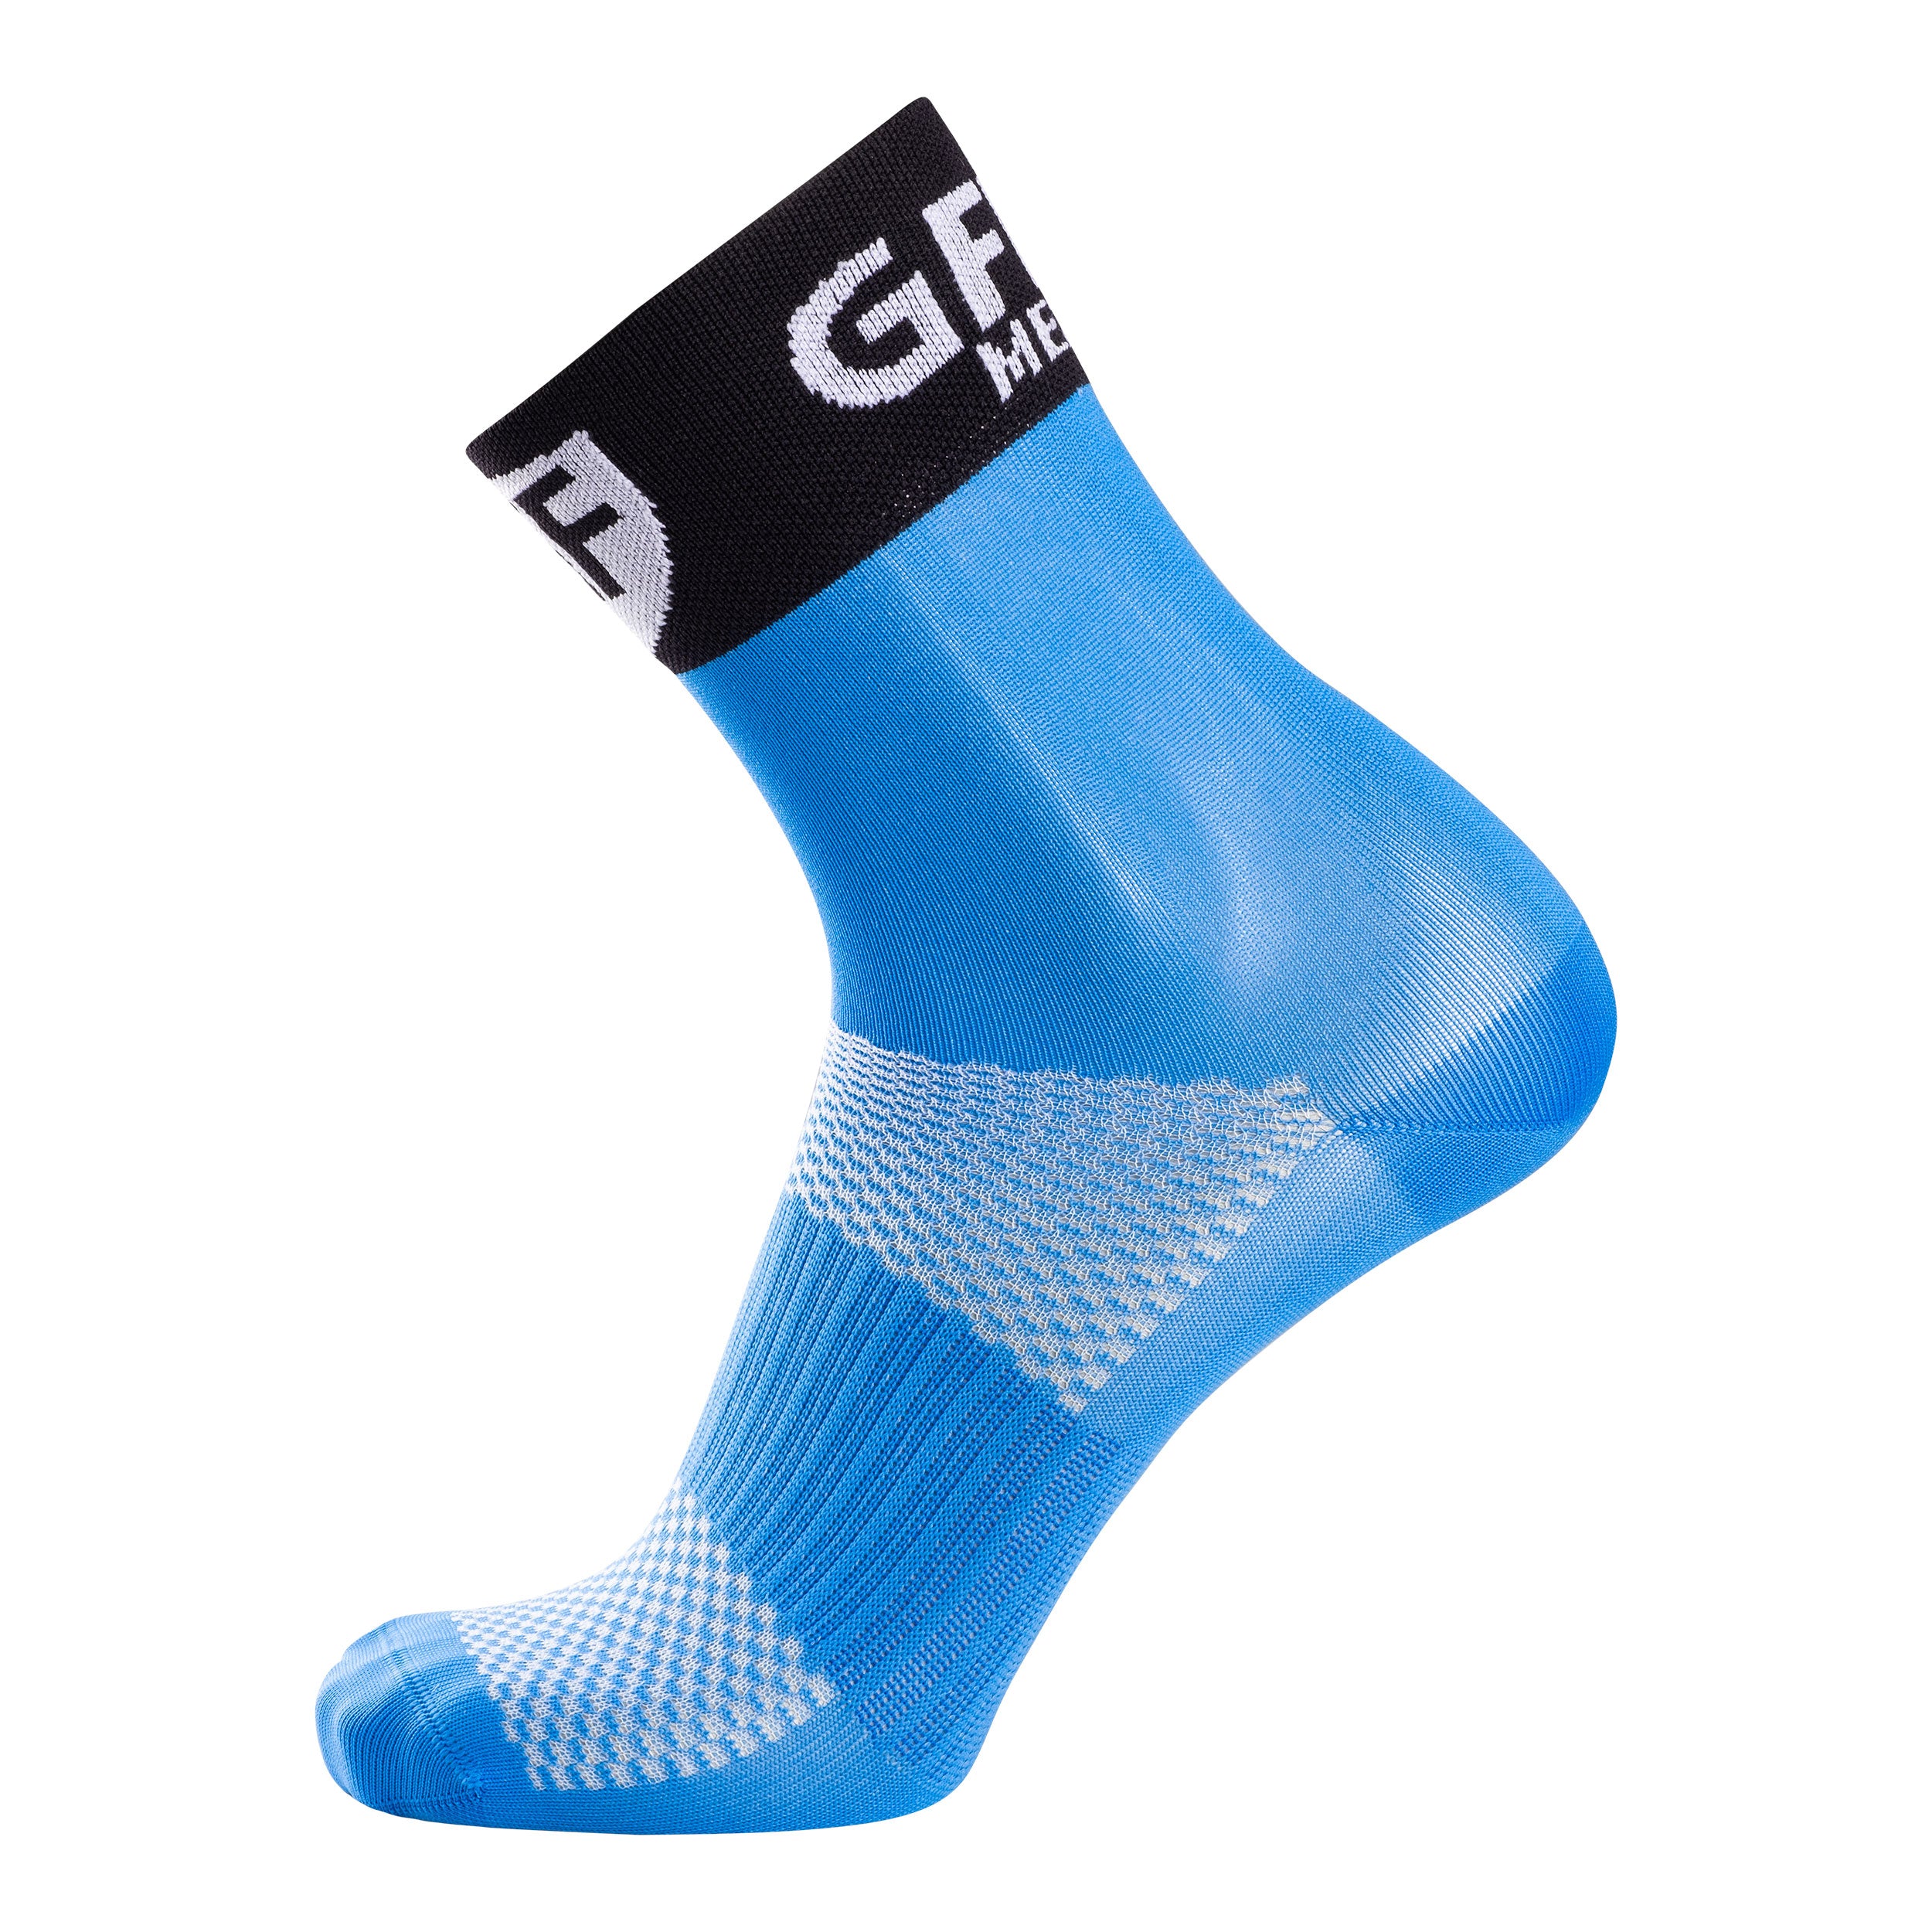 Blue/Black Summer socks